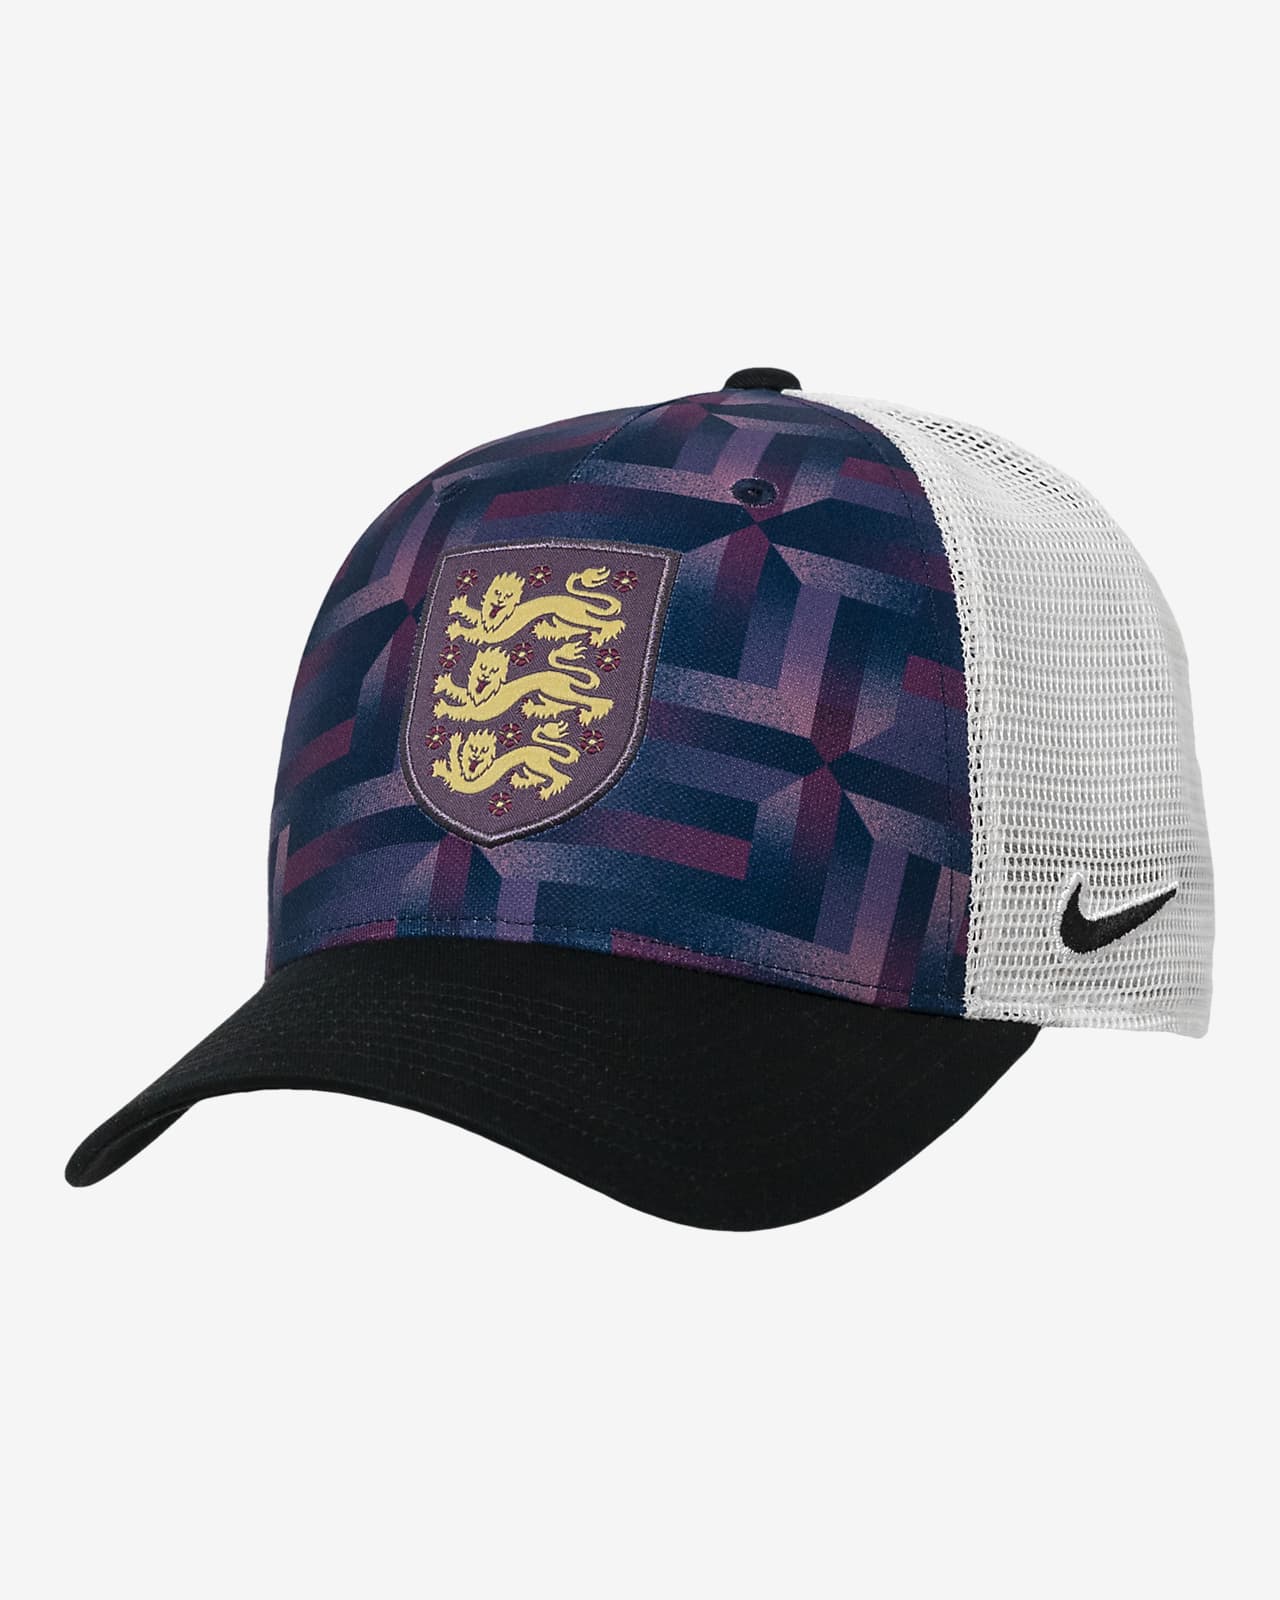 England Nike Soccer Trucker Cap